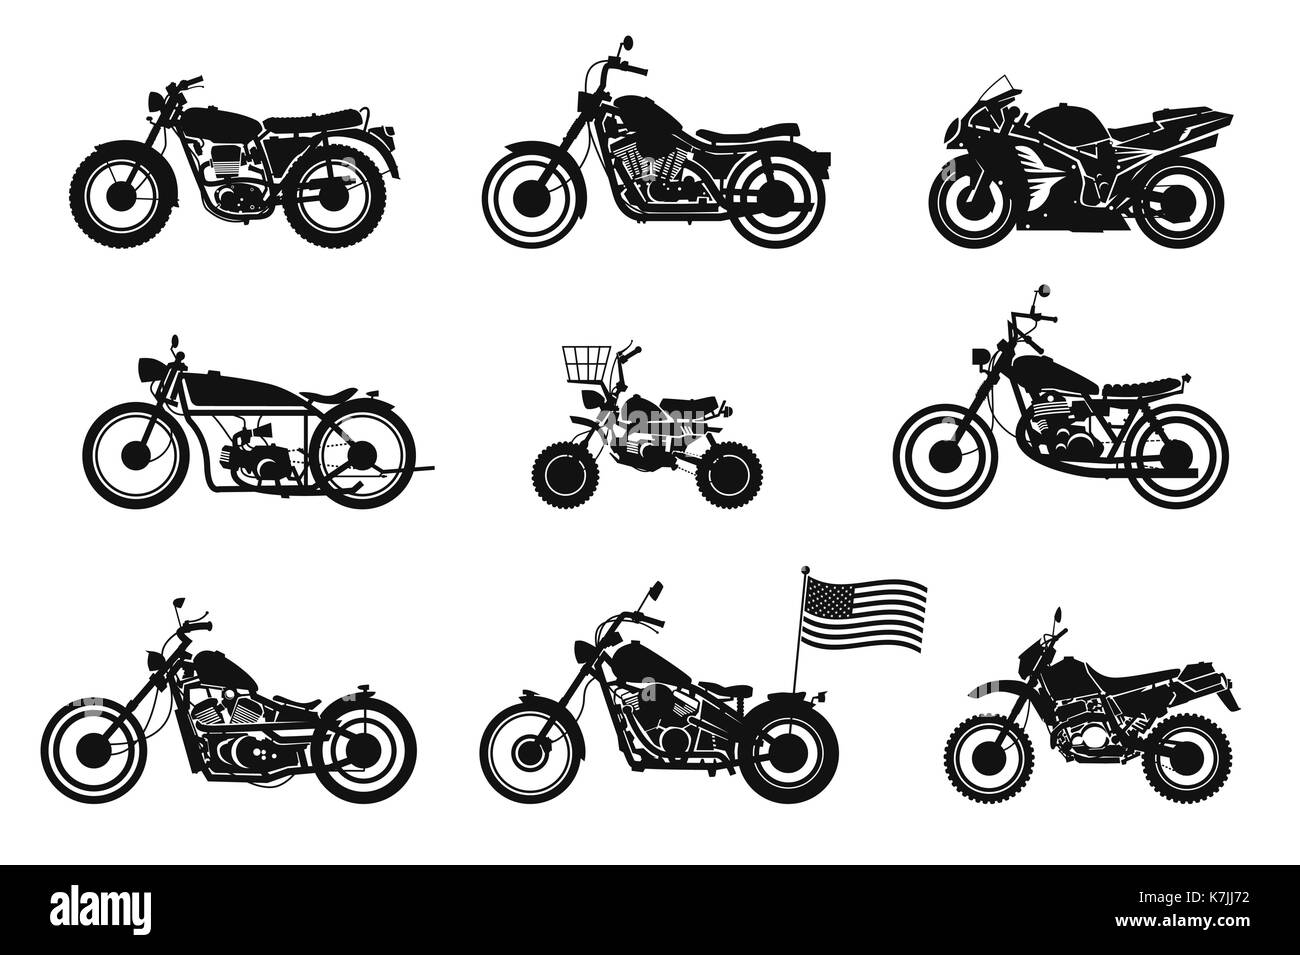 motorcycles vol. 1 Stock Vector